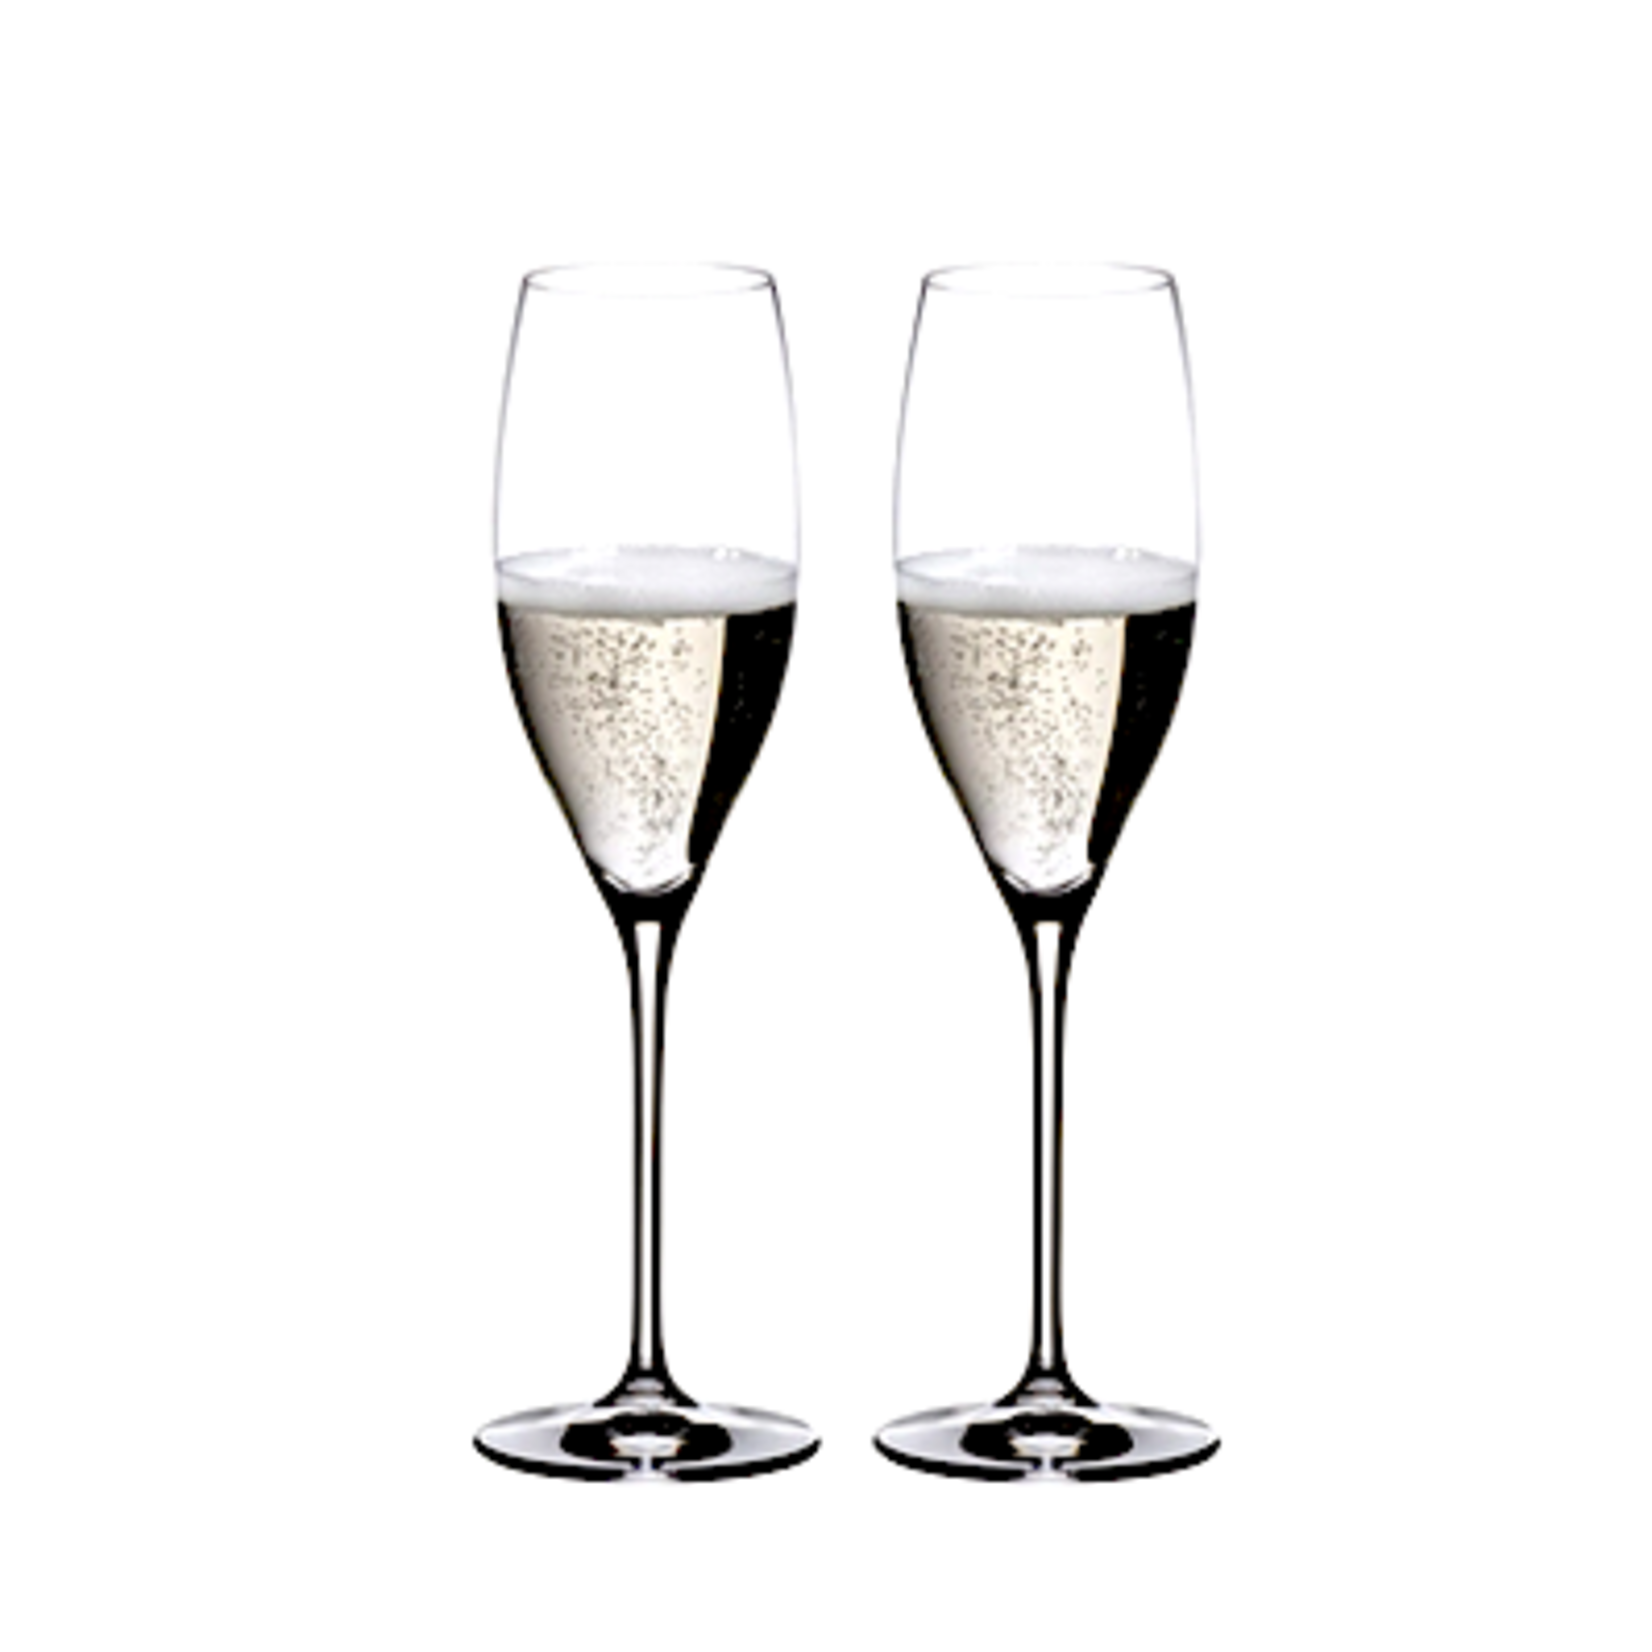 Riedel Riedel Vinum Cuvee Prestige (Champagne) Wine Glasses (Sold as a Pack of 2)